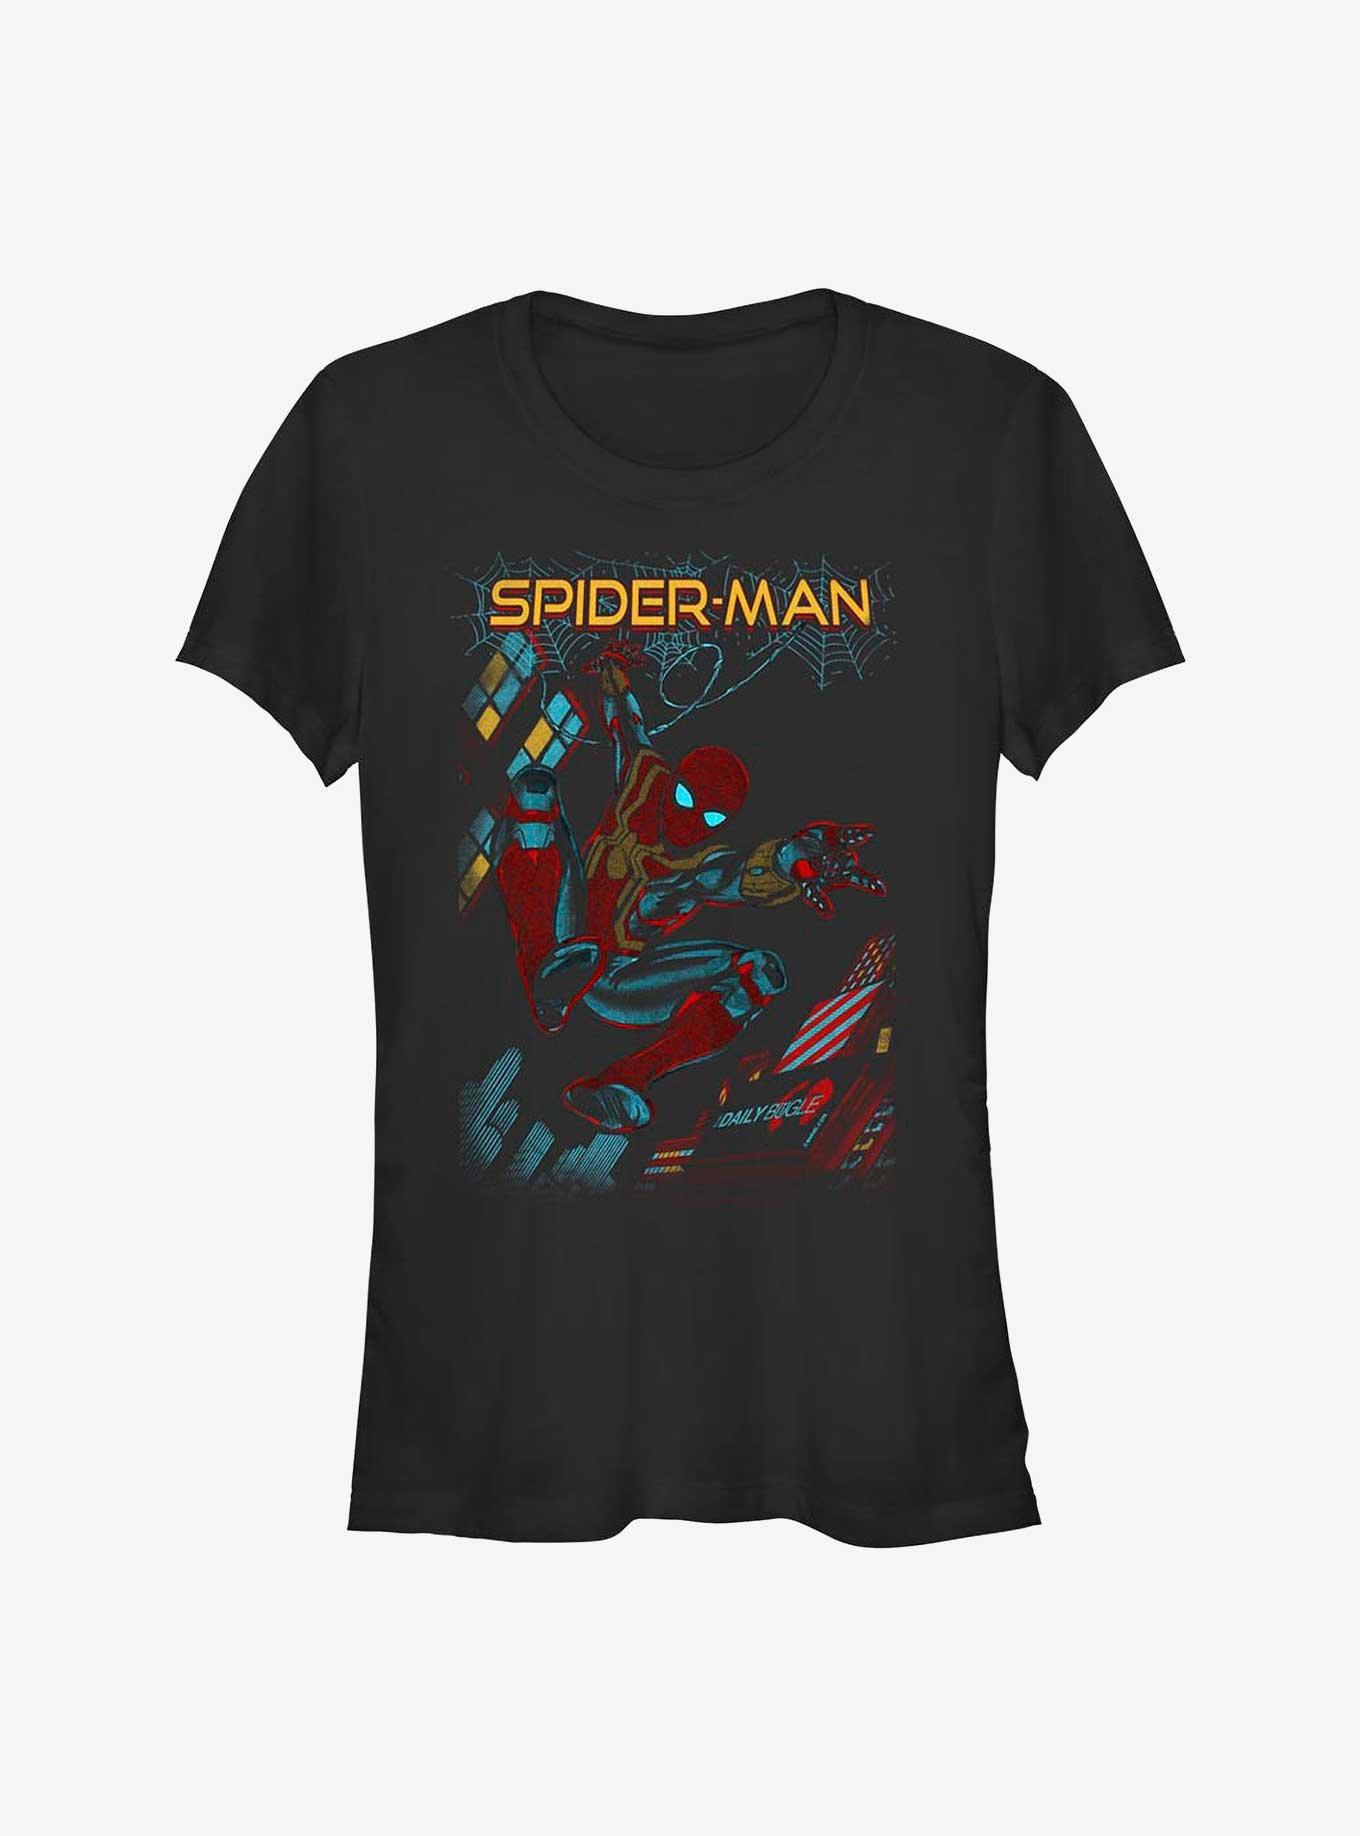 Marvel Spider-Man: No Way Home Slinging Cover Girls T-Shirt